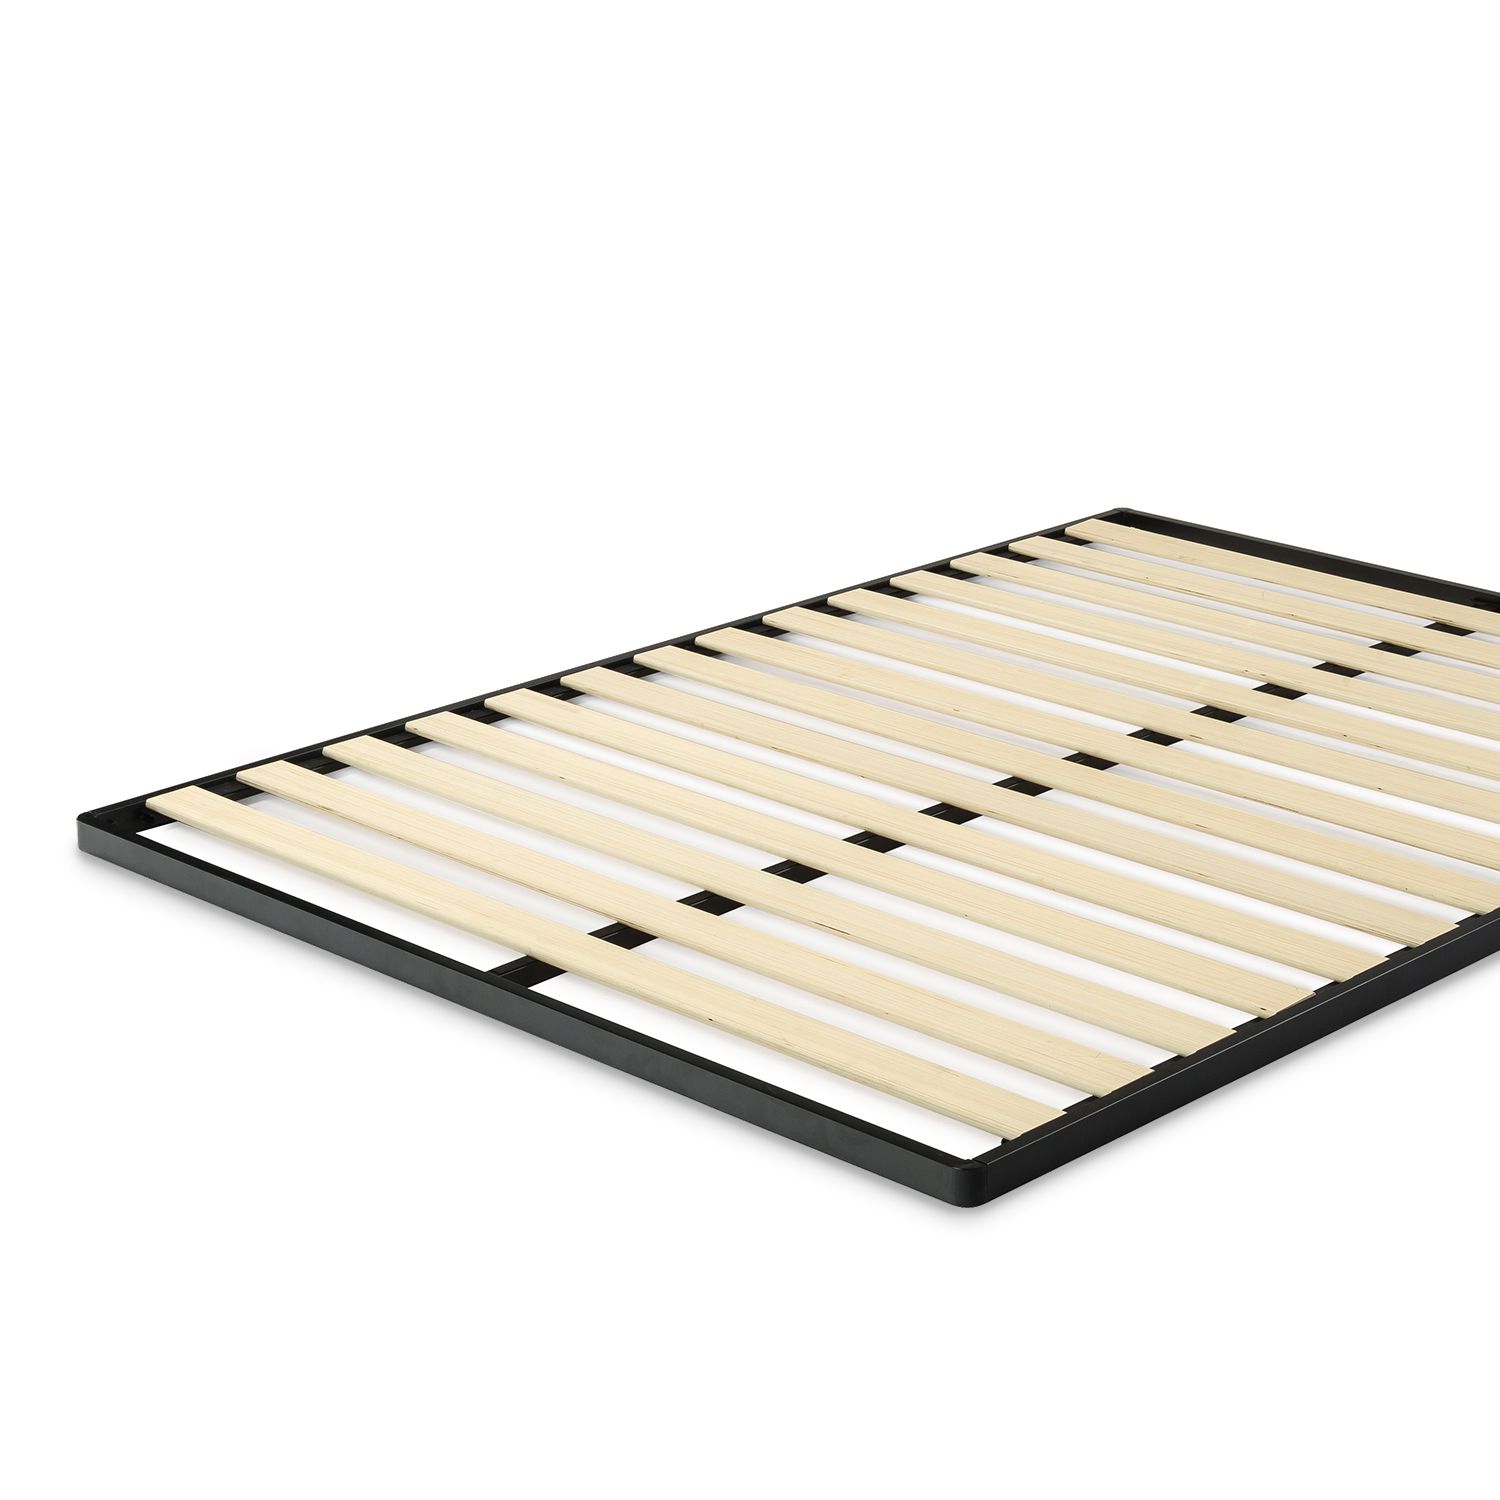 Zinus size KING Bunkie Board 1.6" Metal Frame Replaces Wood Slats